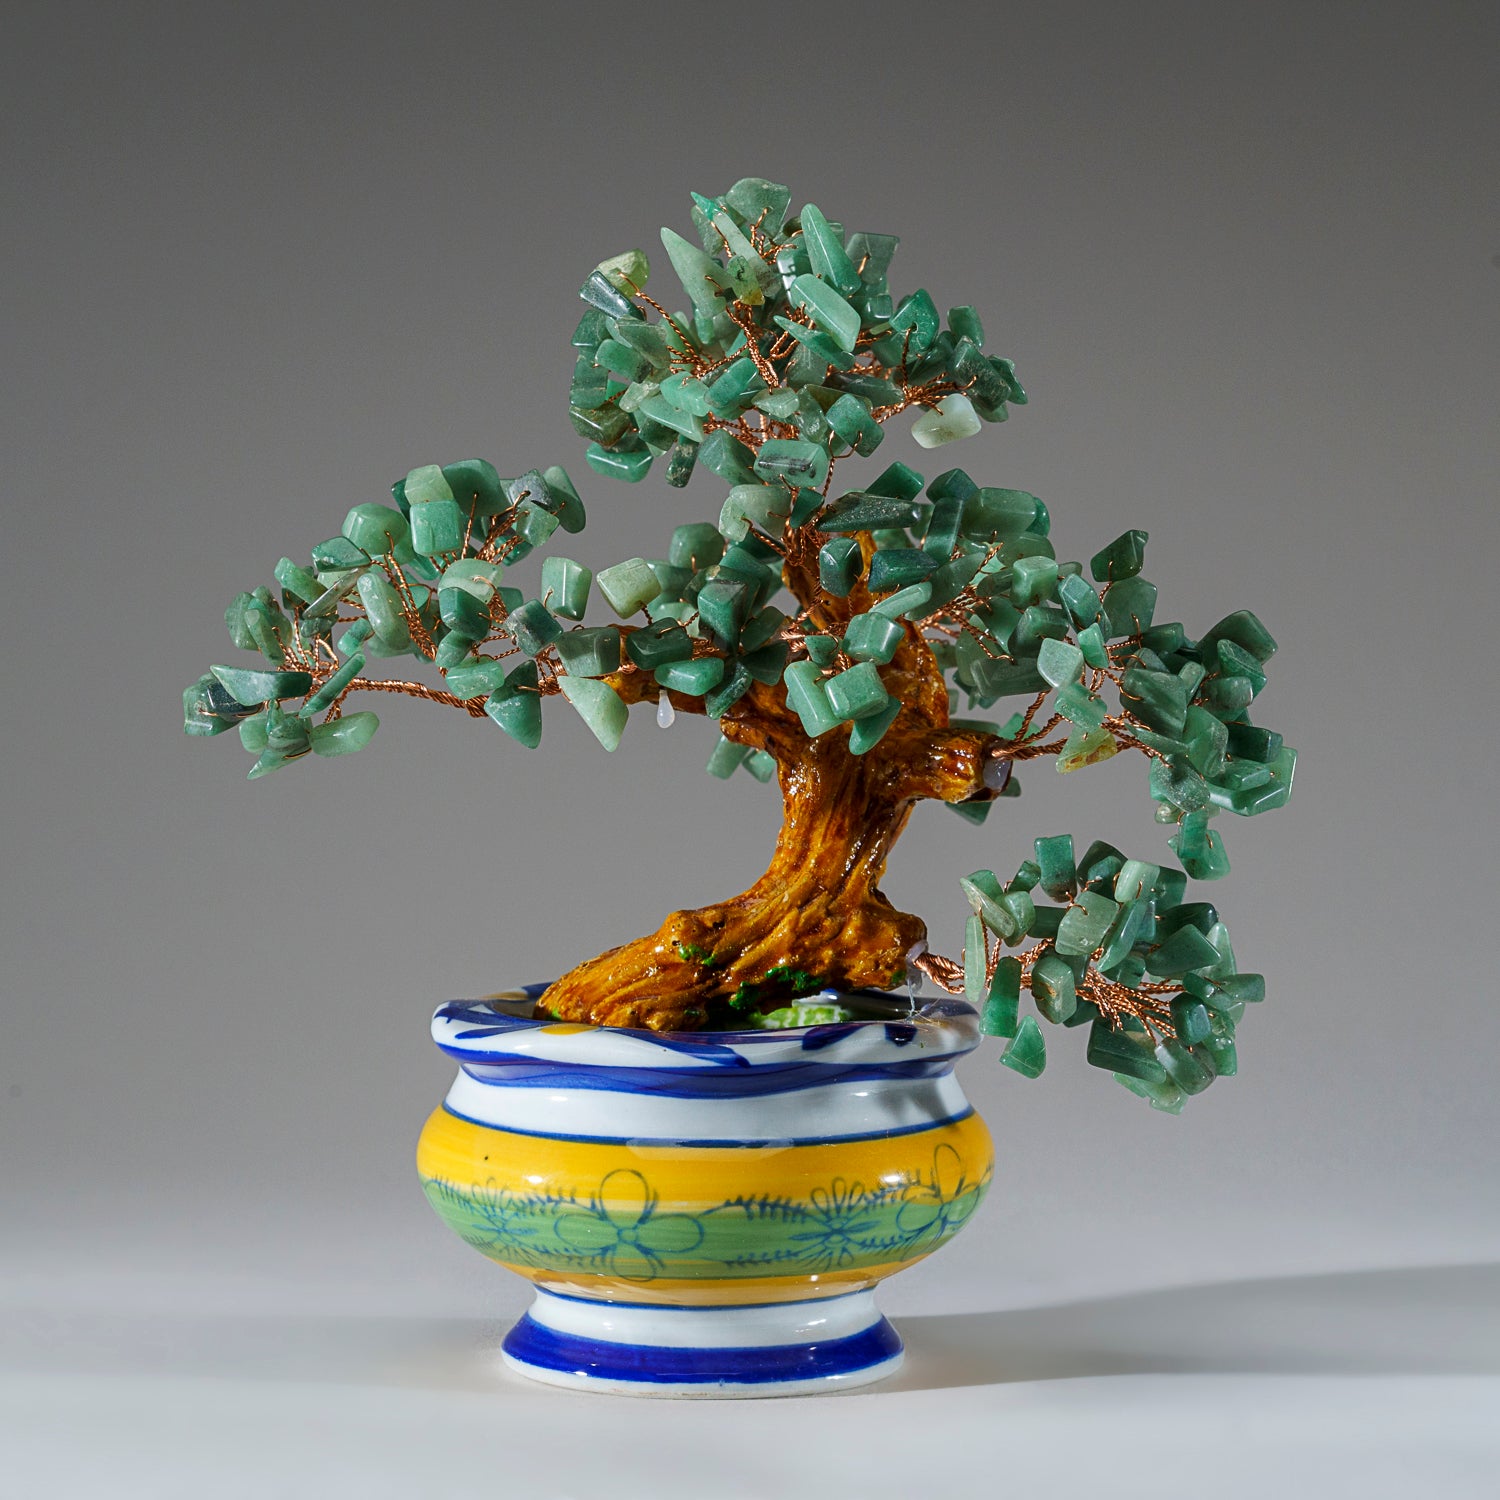 Genuine Green Aventurine Gemstone Bonsai Tree in Round Ceramic Pot (8.5” Tall)